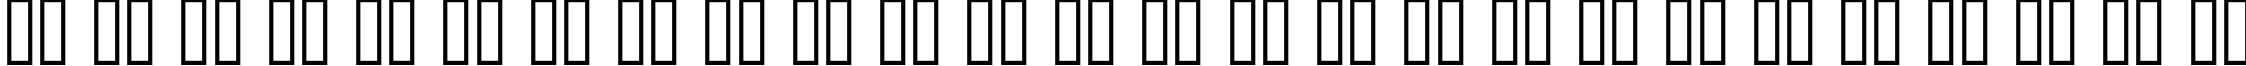 Пример написания английского алфавита шрифтом Tunga